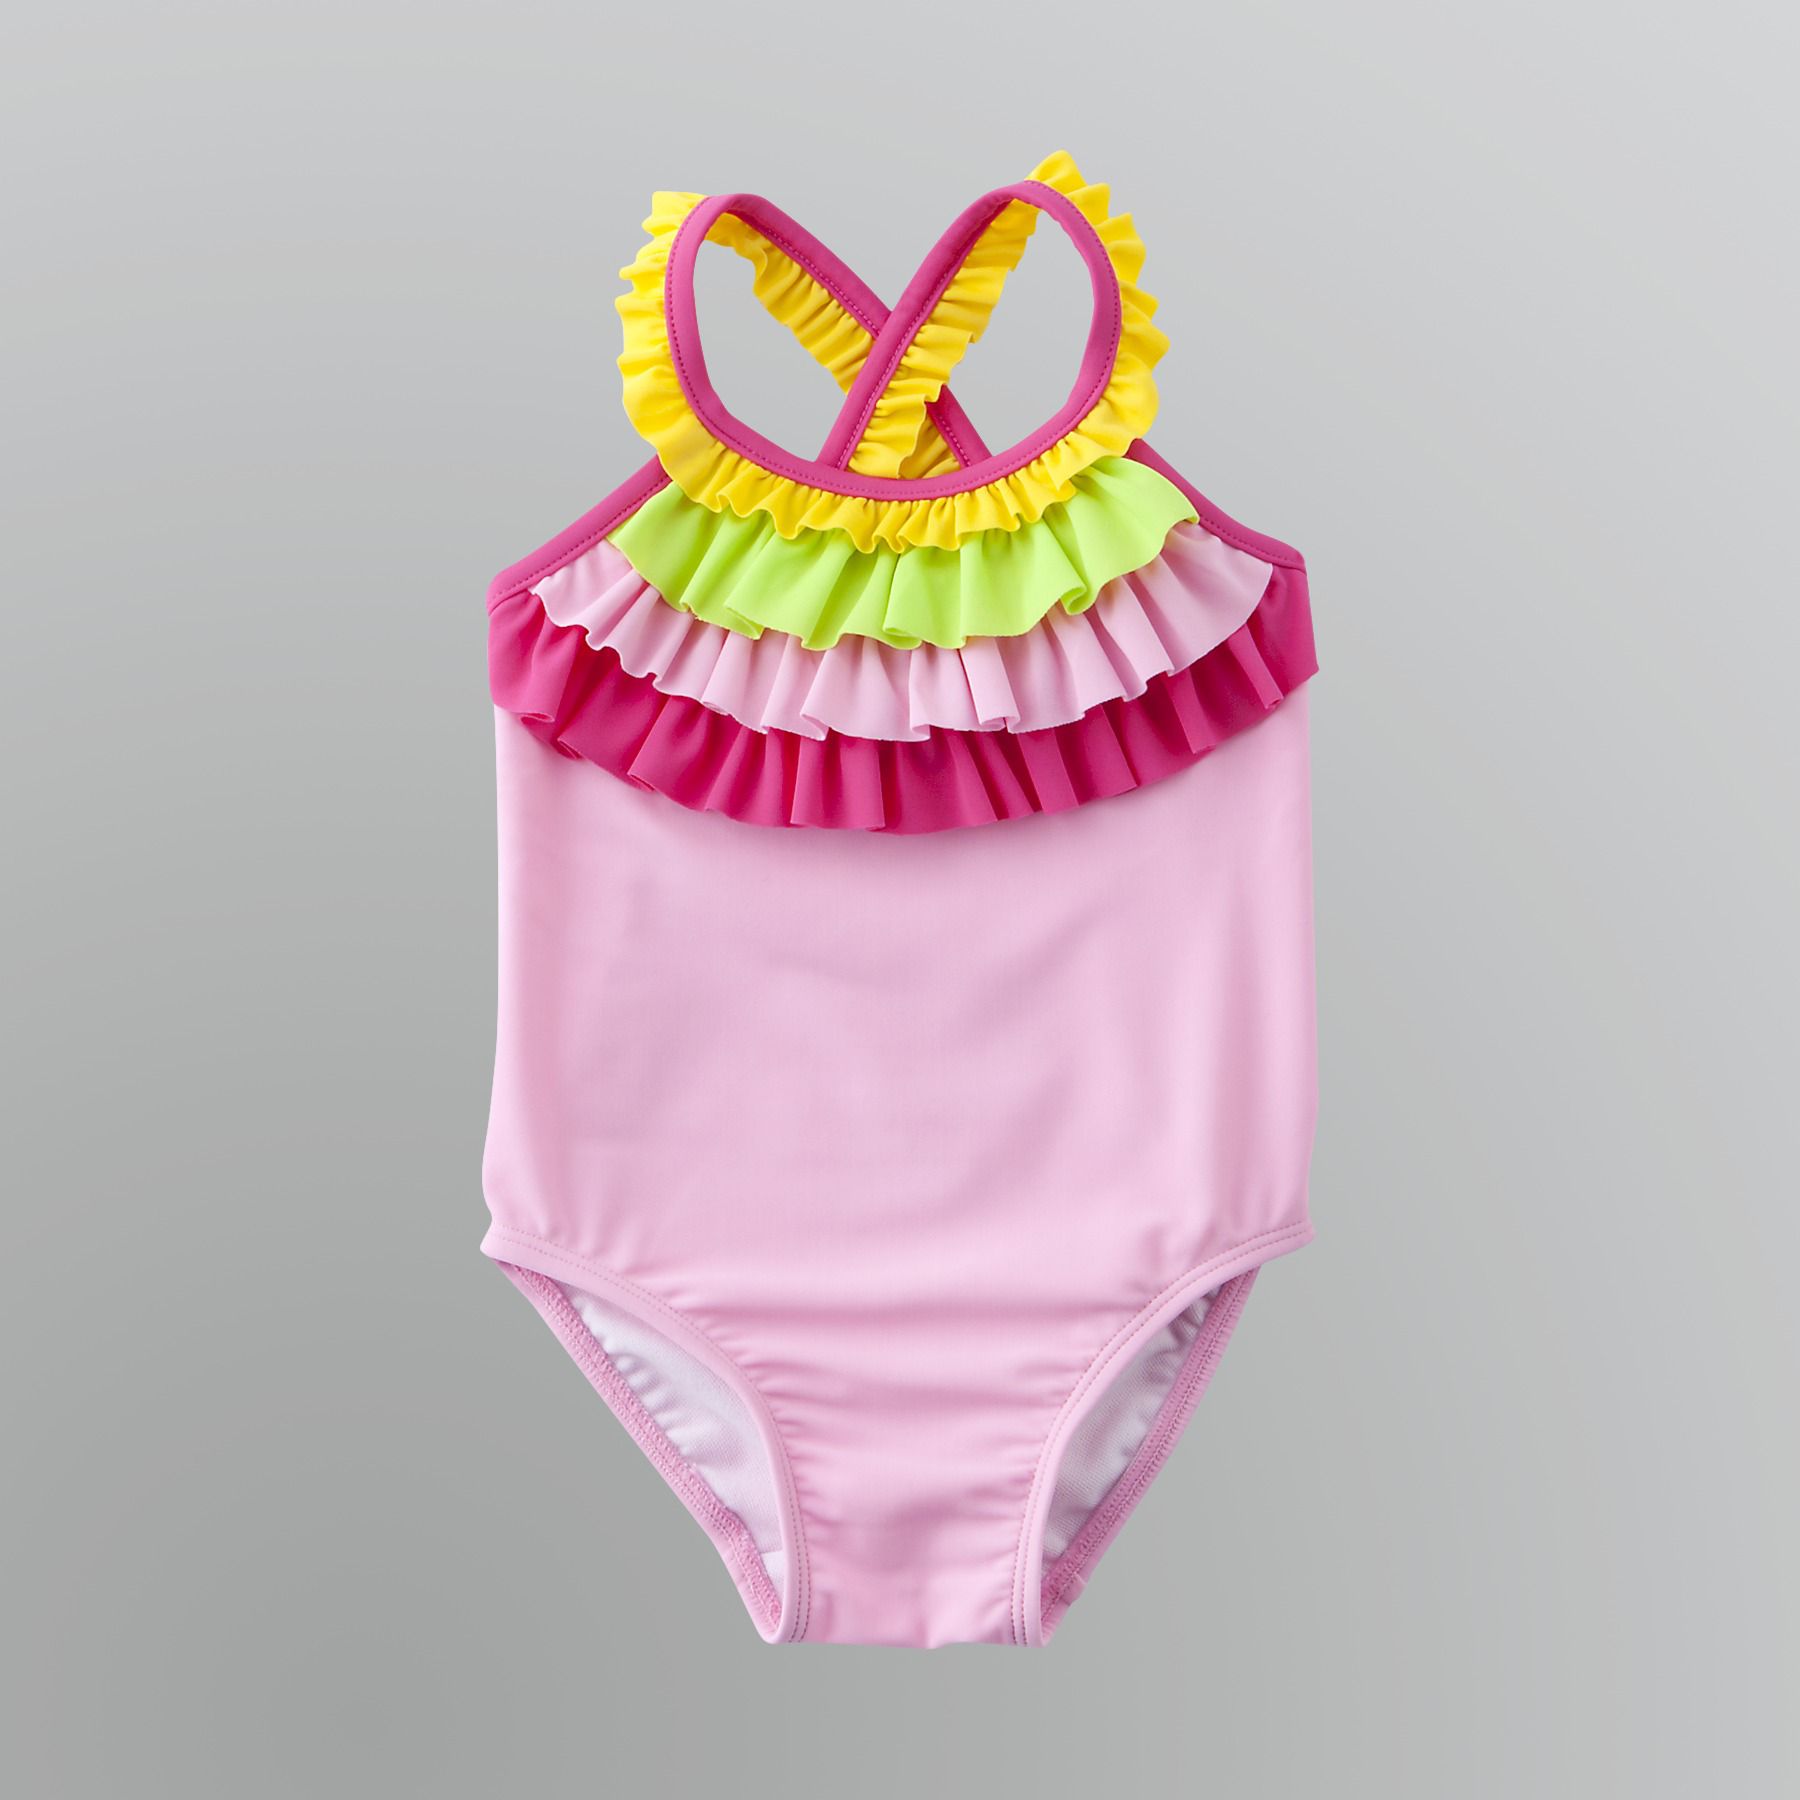 Joe Boxer Infant & Toddler Girl's Ruffle One-Piece Swimsuit - Rainbow